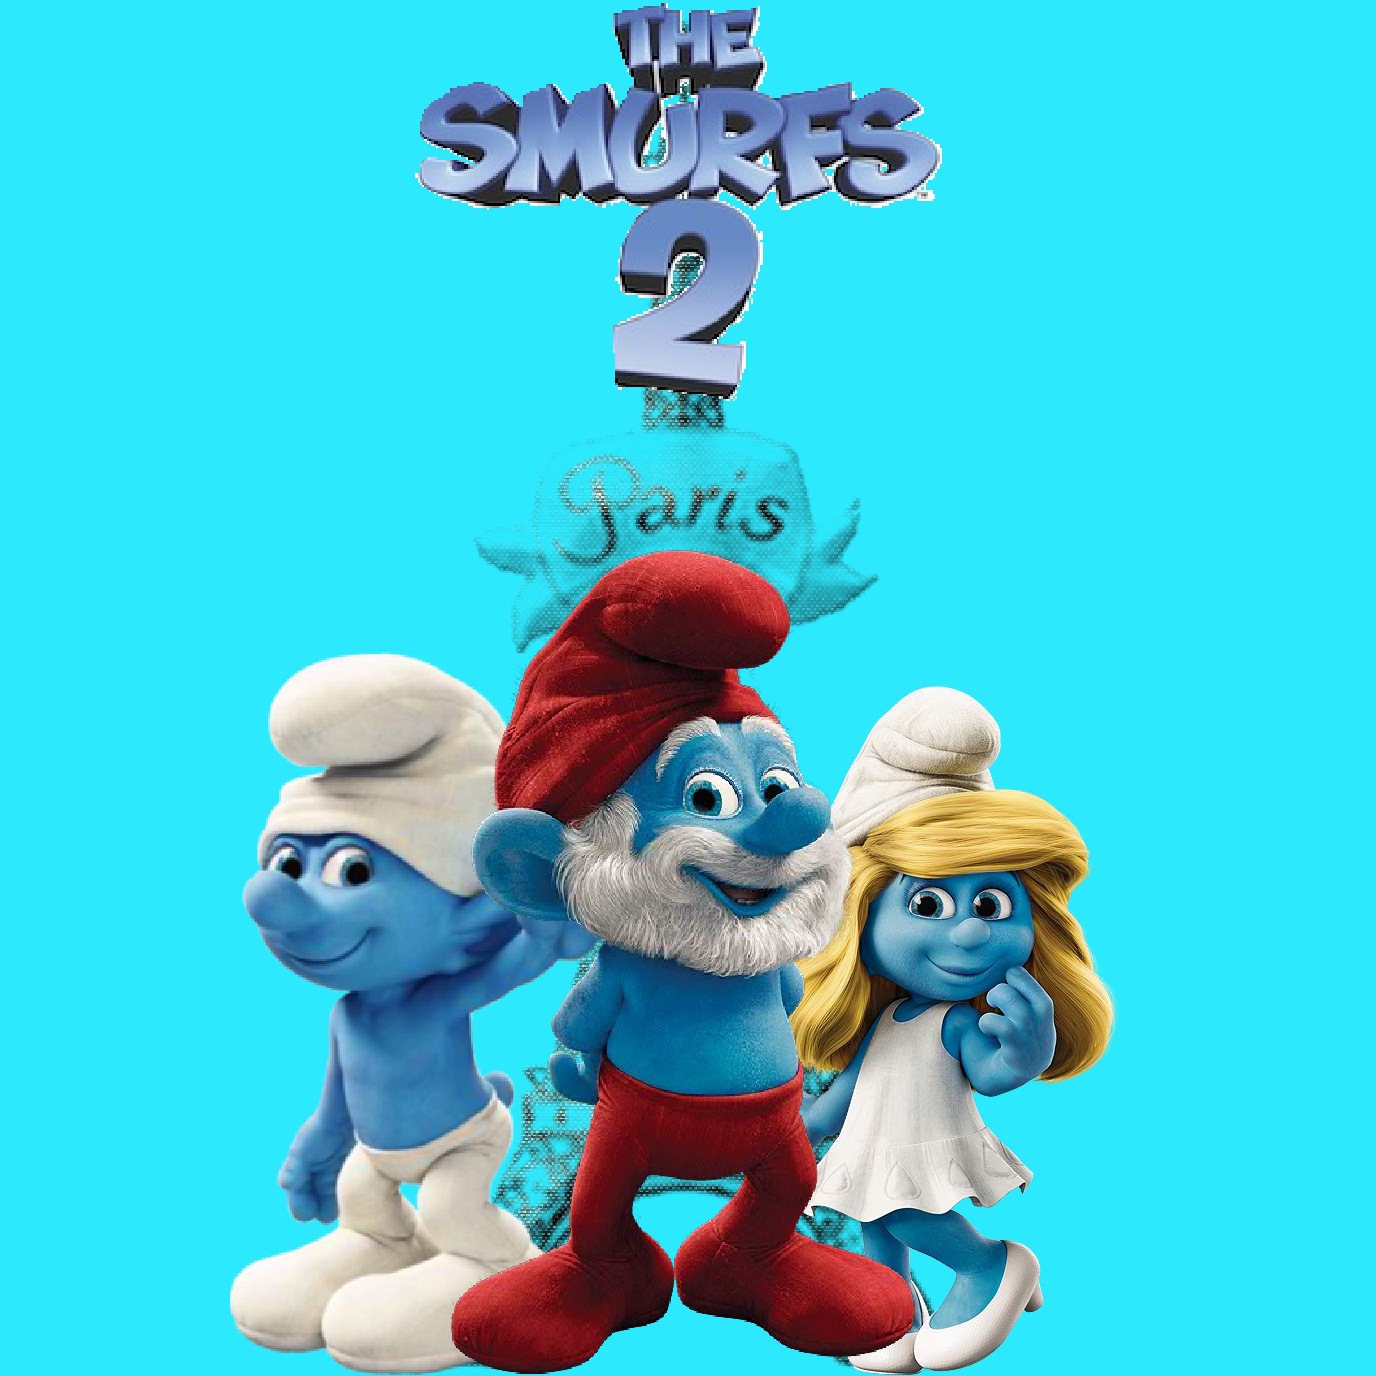 The Smurfs 2 Worlds International Poster - Smurfs Movie Poster - 1376x1376  Wallpaper 